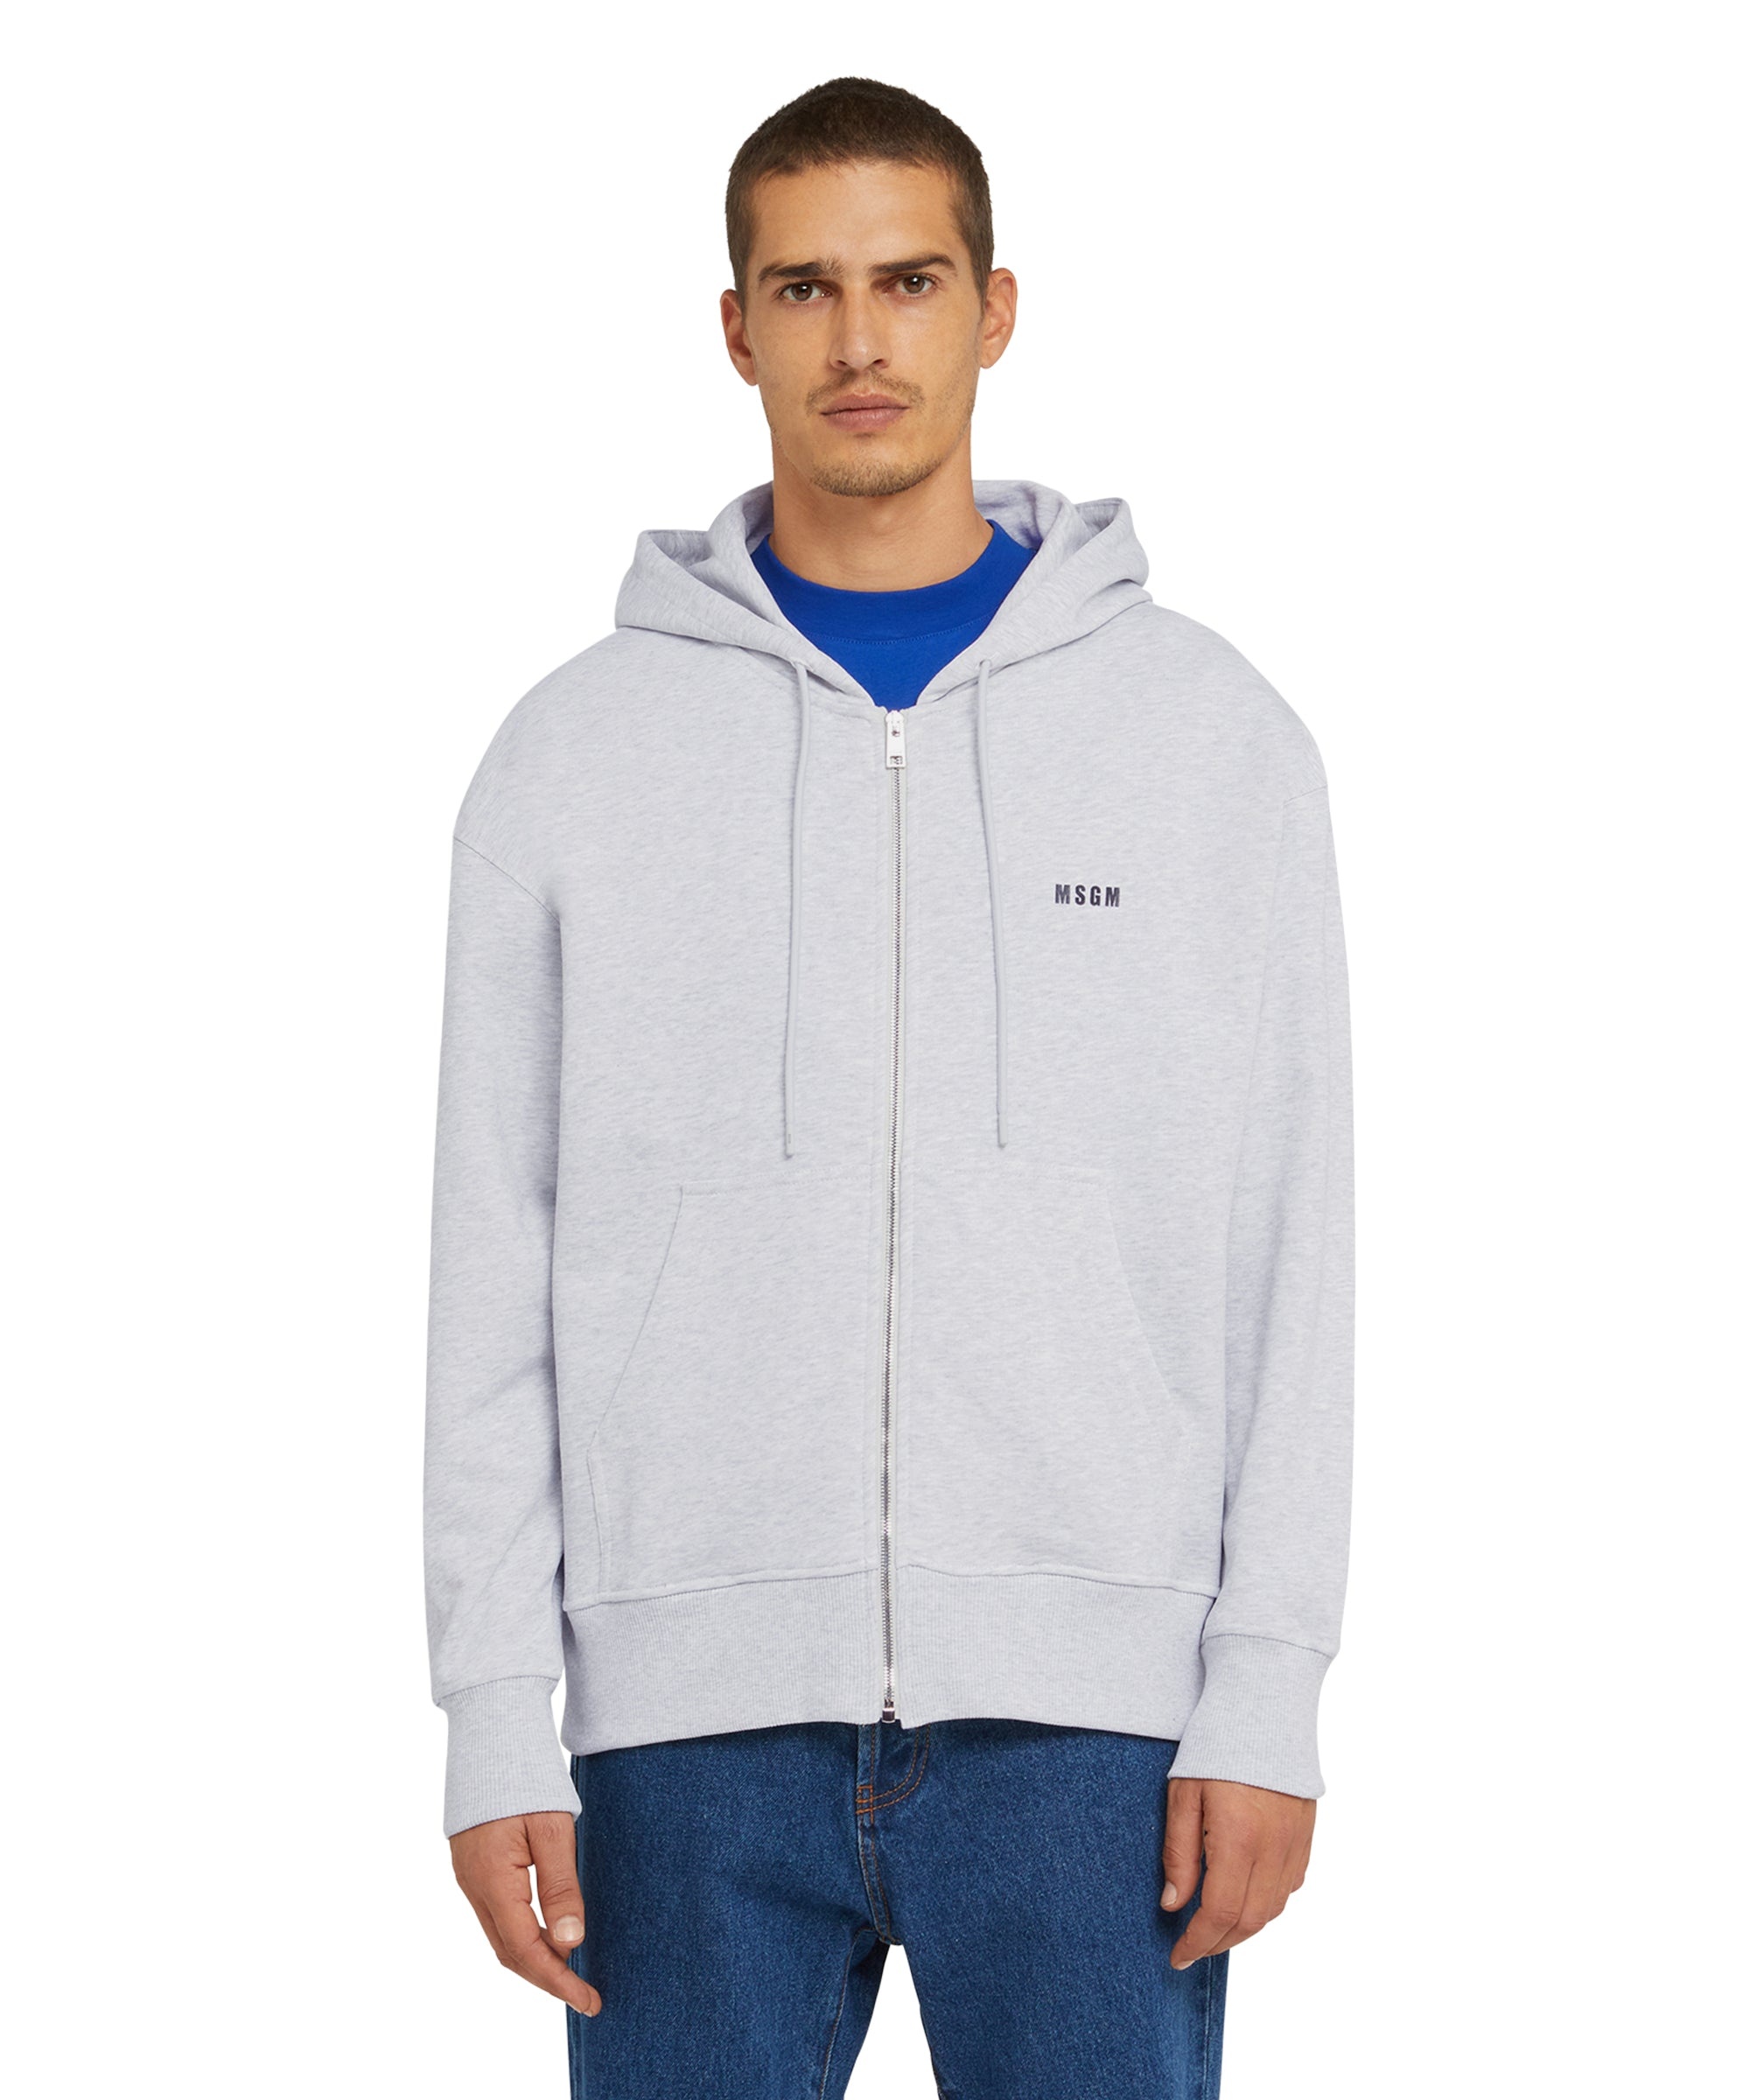 Cotton sweatshirt with hood and micro logo - 2